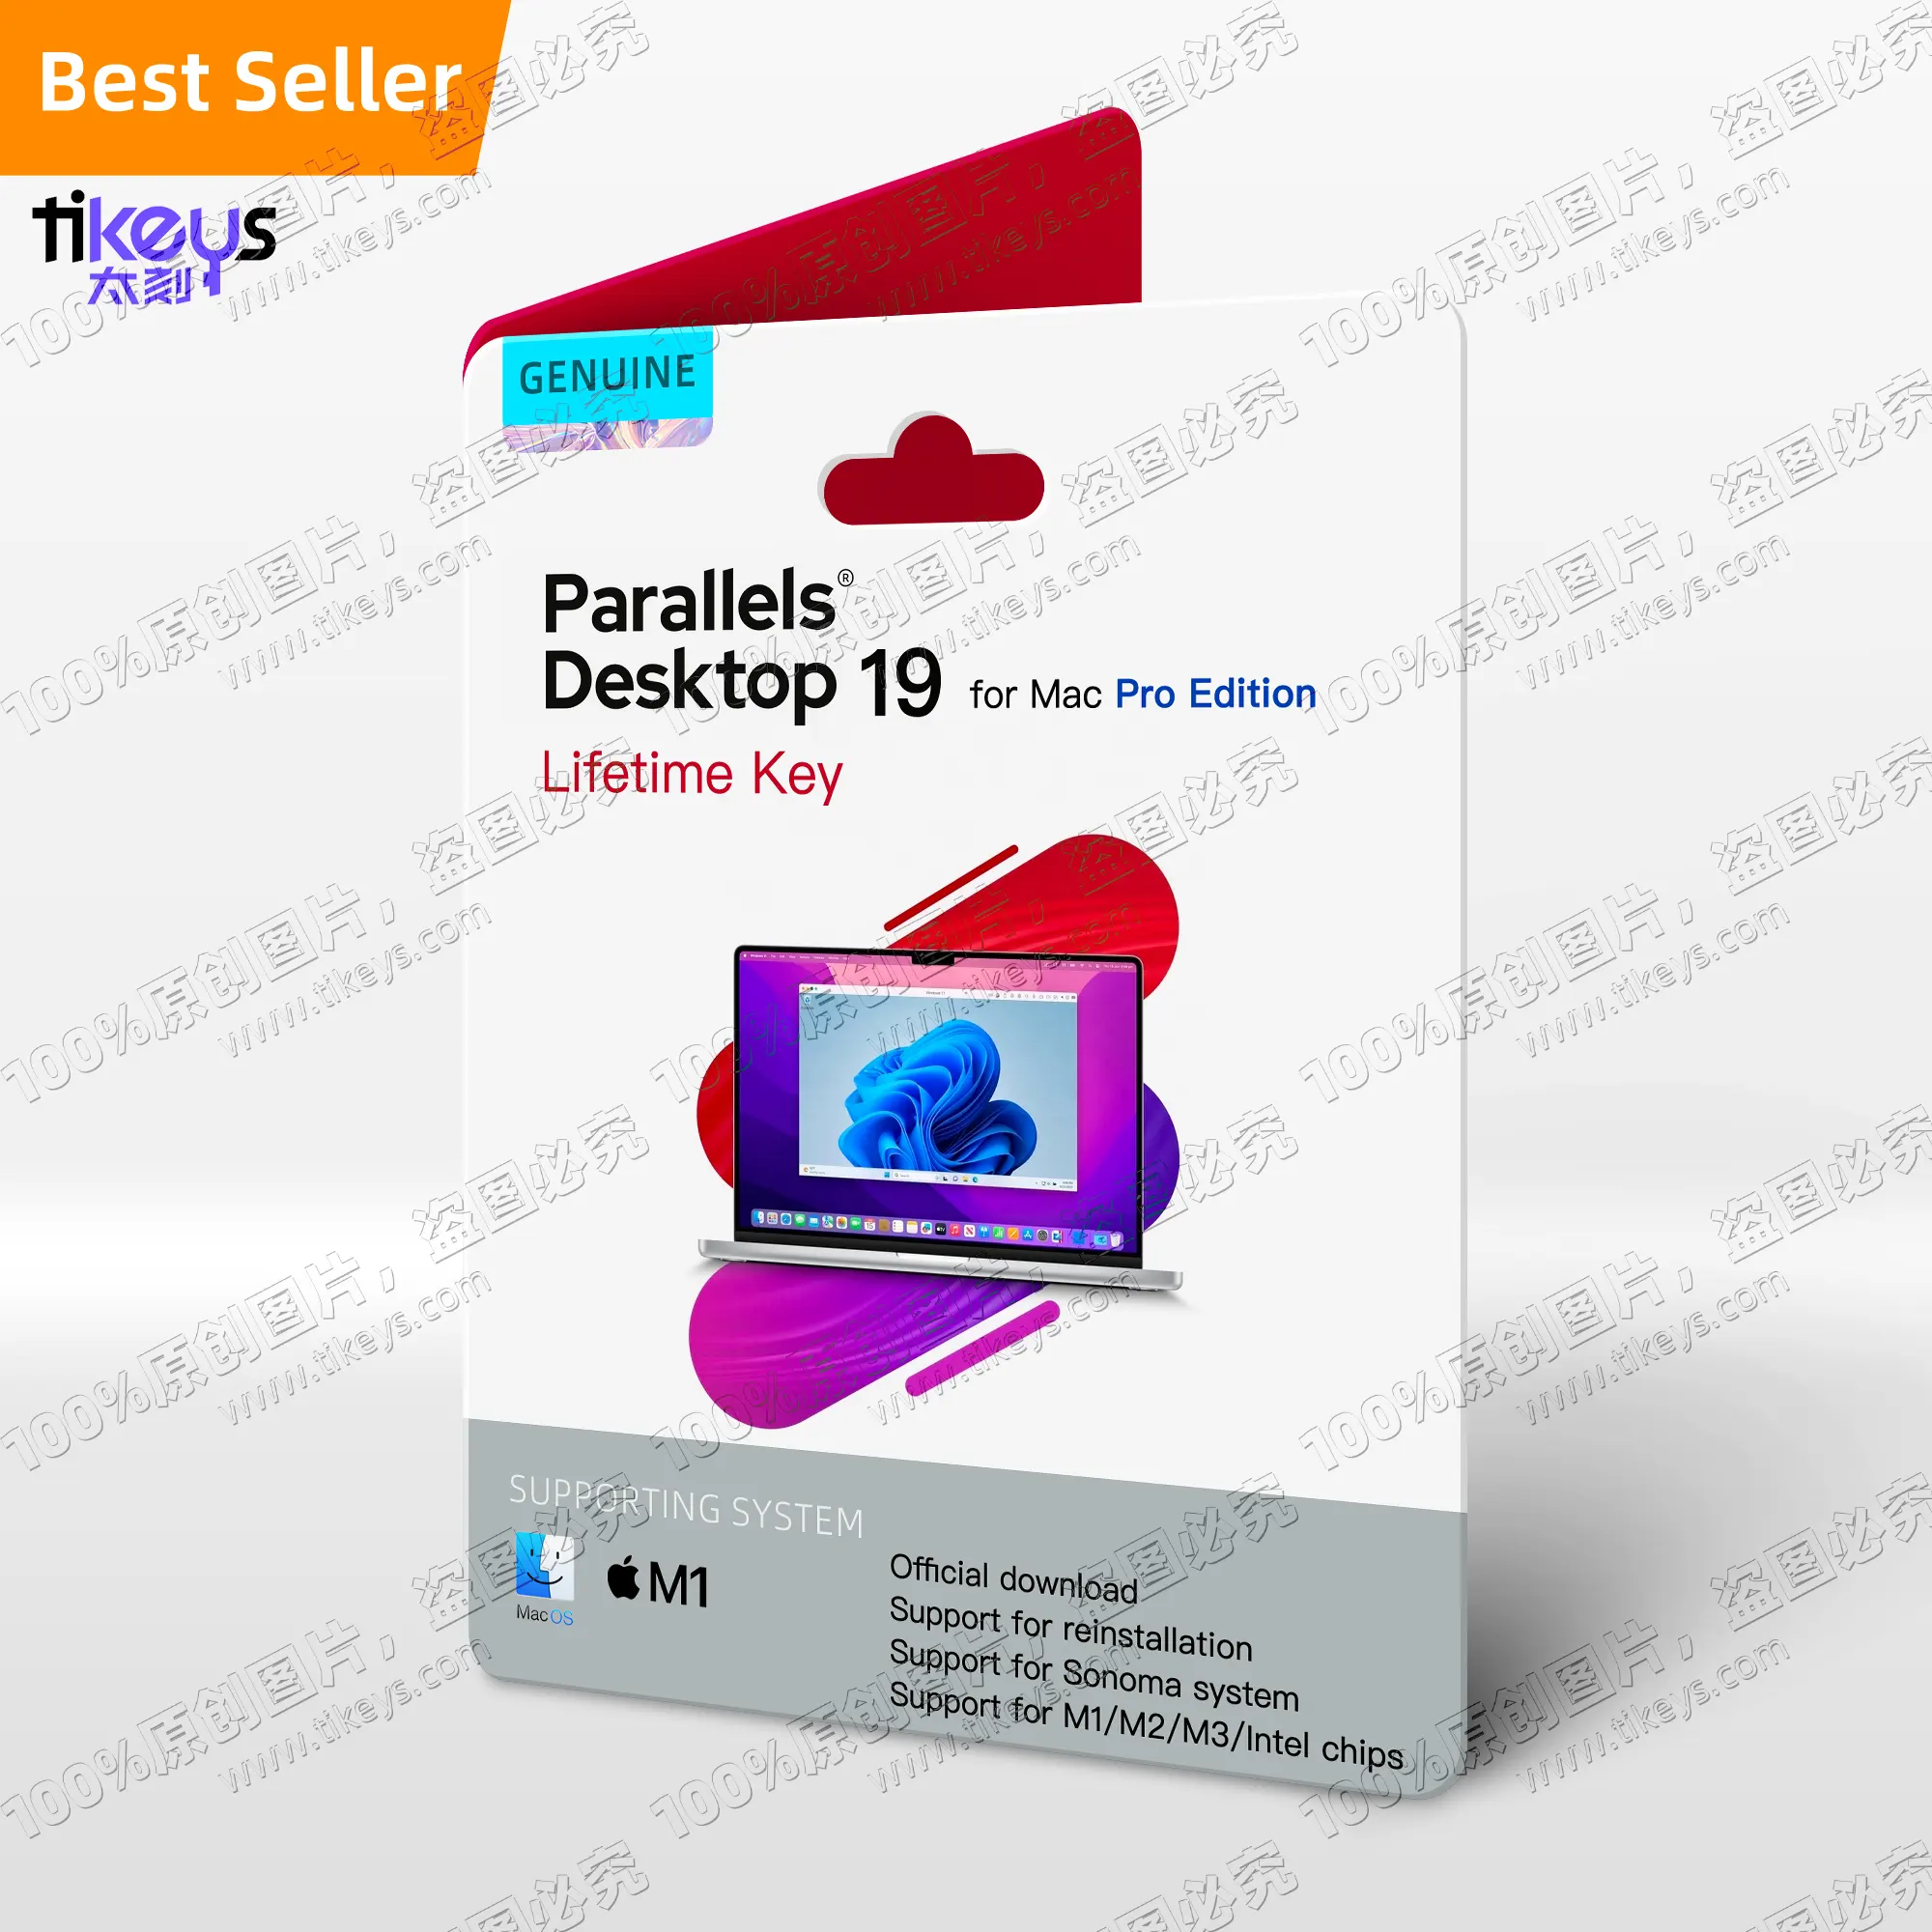 24/7 Online Parallel Desktop 19 for Mac Pro Edition Lifetime Key Genuine Licence Online Activation Virtual Machine Software